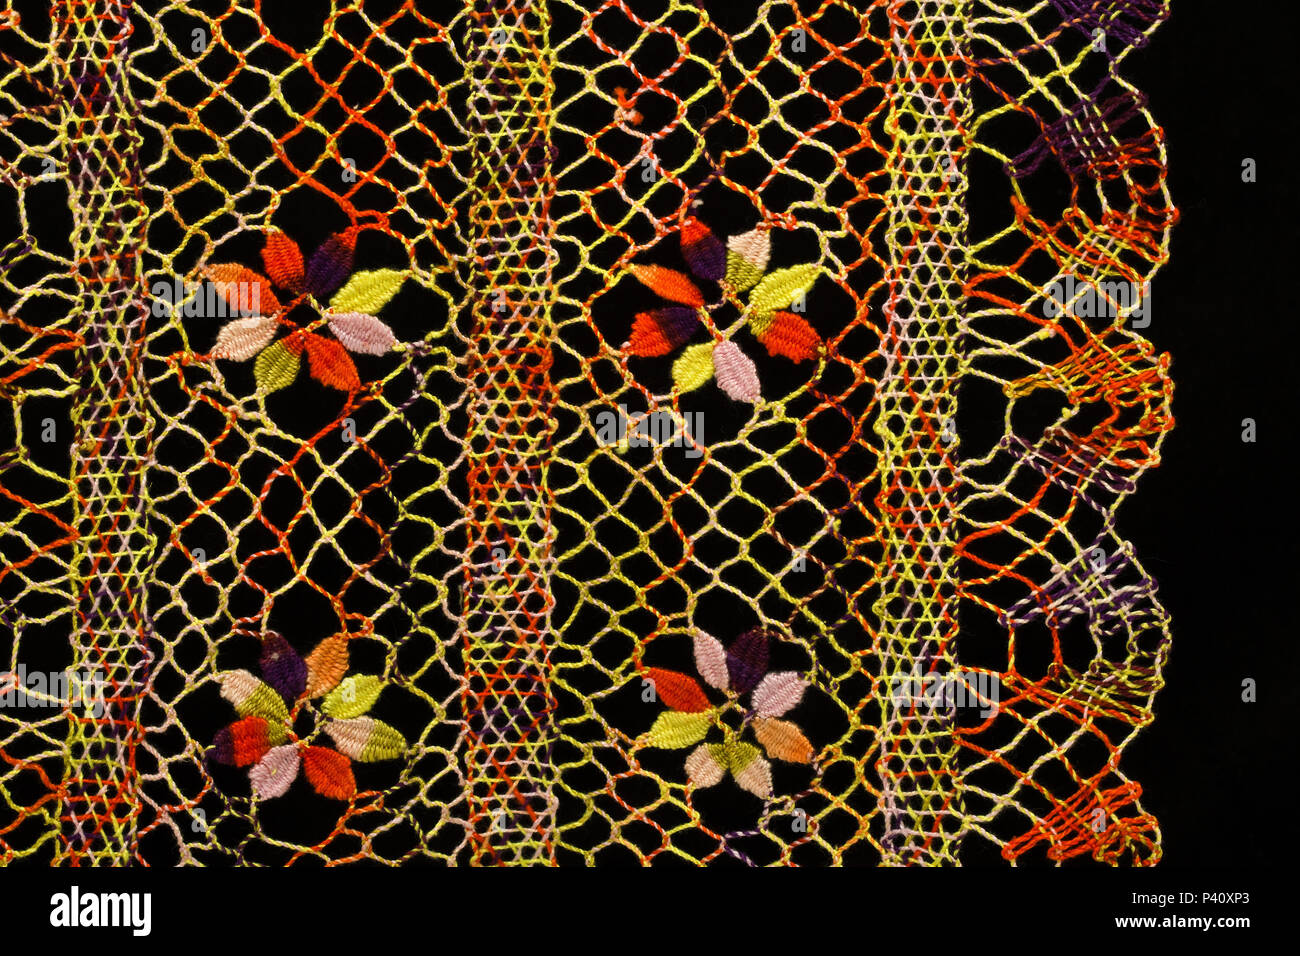 Renda de bilros renda de bilros colorida toalhinha de renda de bilros  Nordeste Brasil artesanato Artesanato do Nordeste trabalho manual Stock  Photo - Alamy